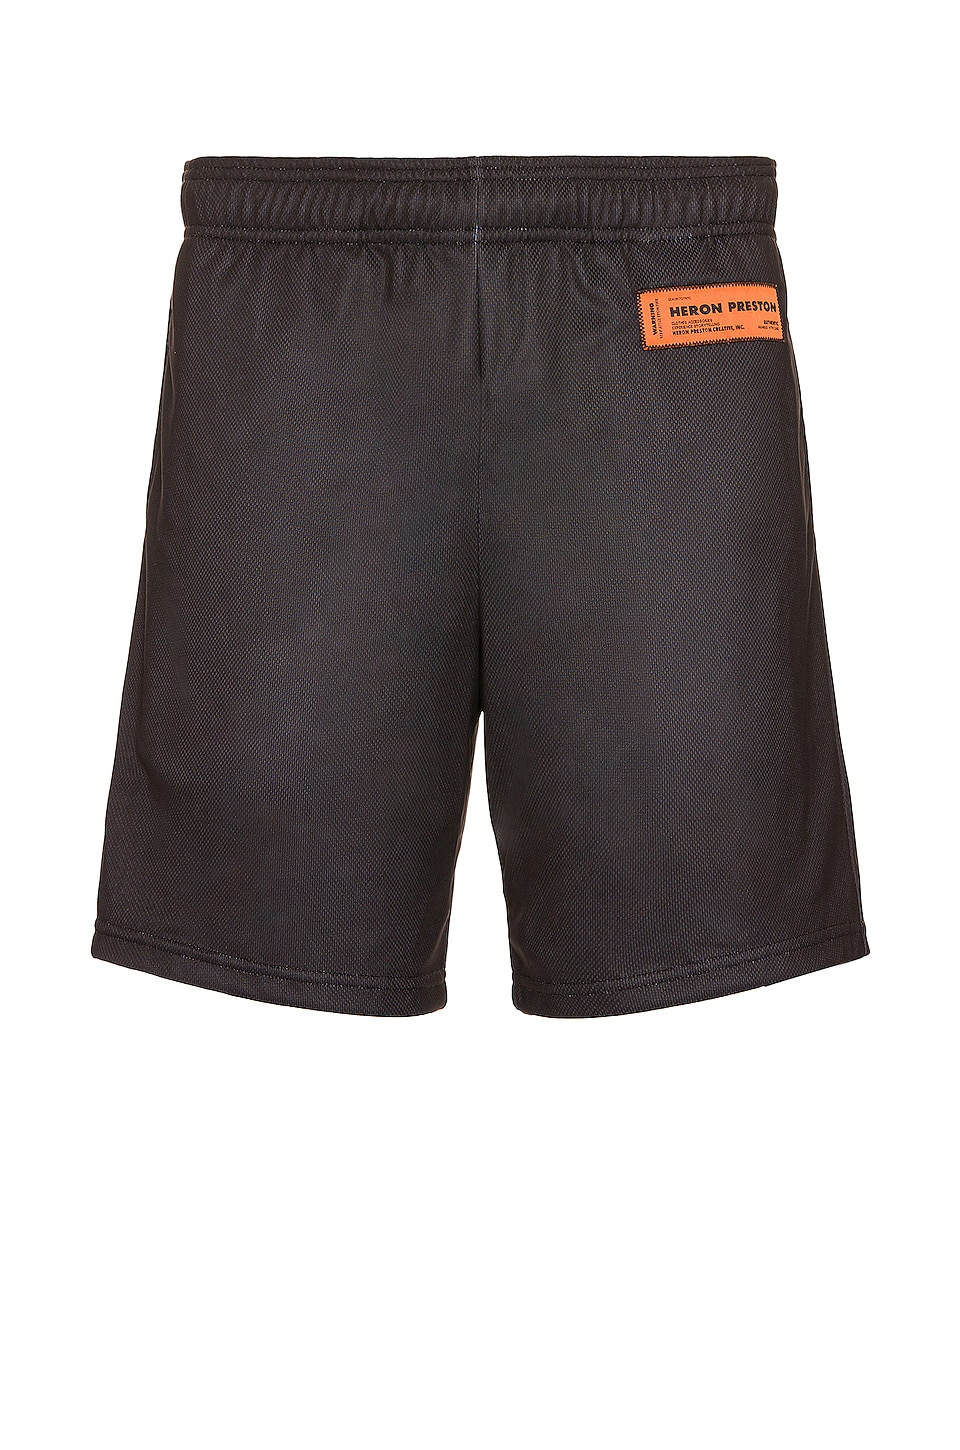 Heron Preston Dry Fit Shorts en Black